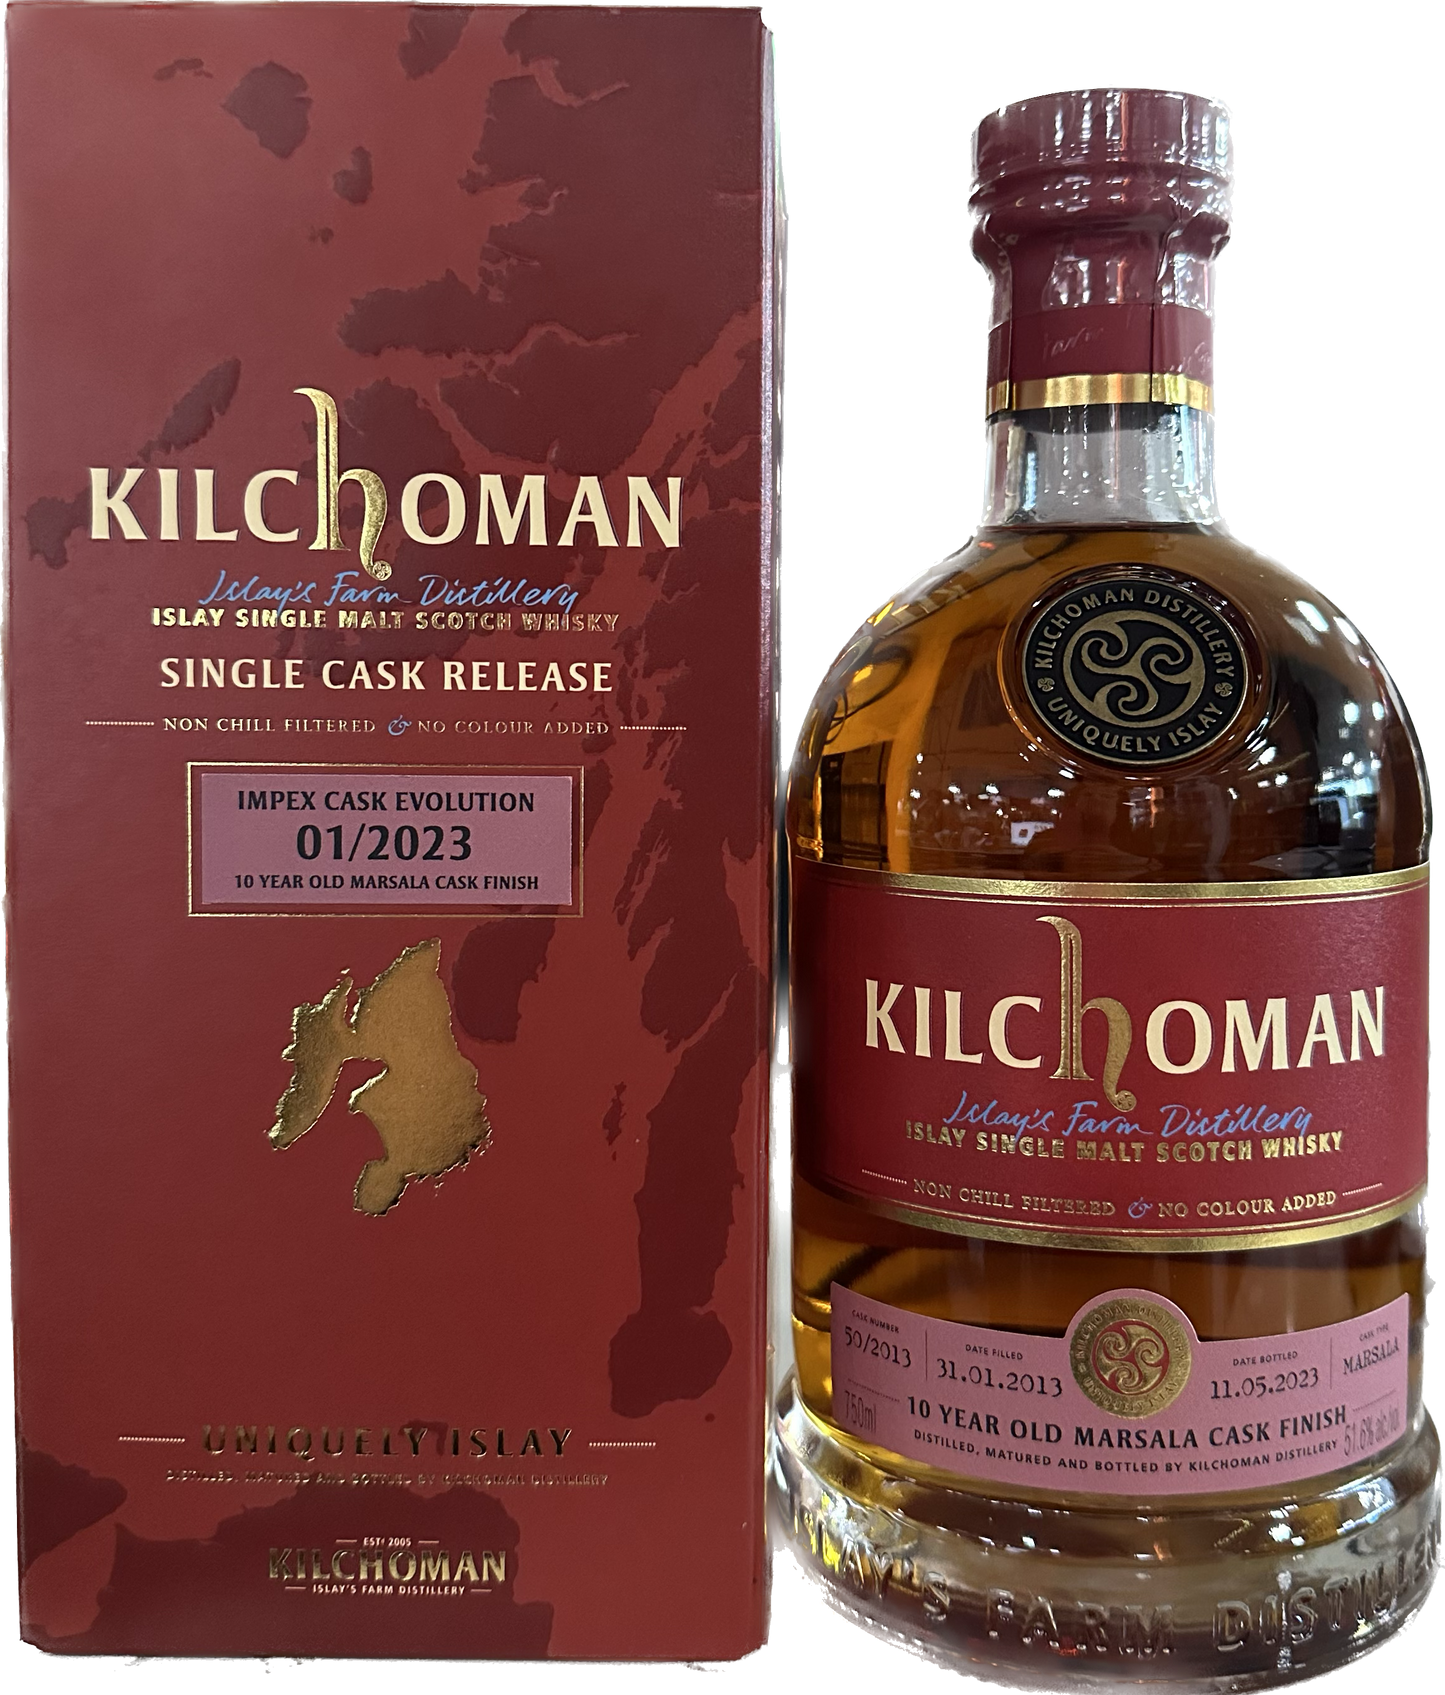 KILCHOMAN SCOTCH SINGLE MALT SINGLE CASK RELEASE IMPEX CASK EVOLUTION 01/2023 ISLAY 10YR 750ML - Remedy Liquor